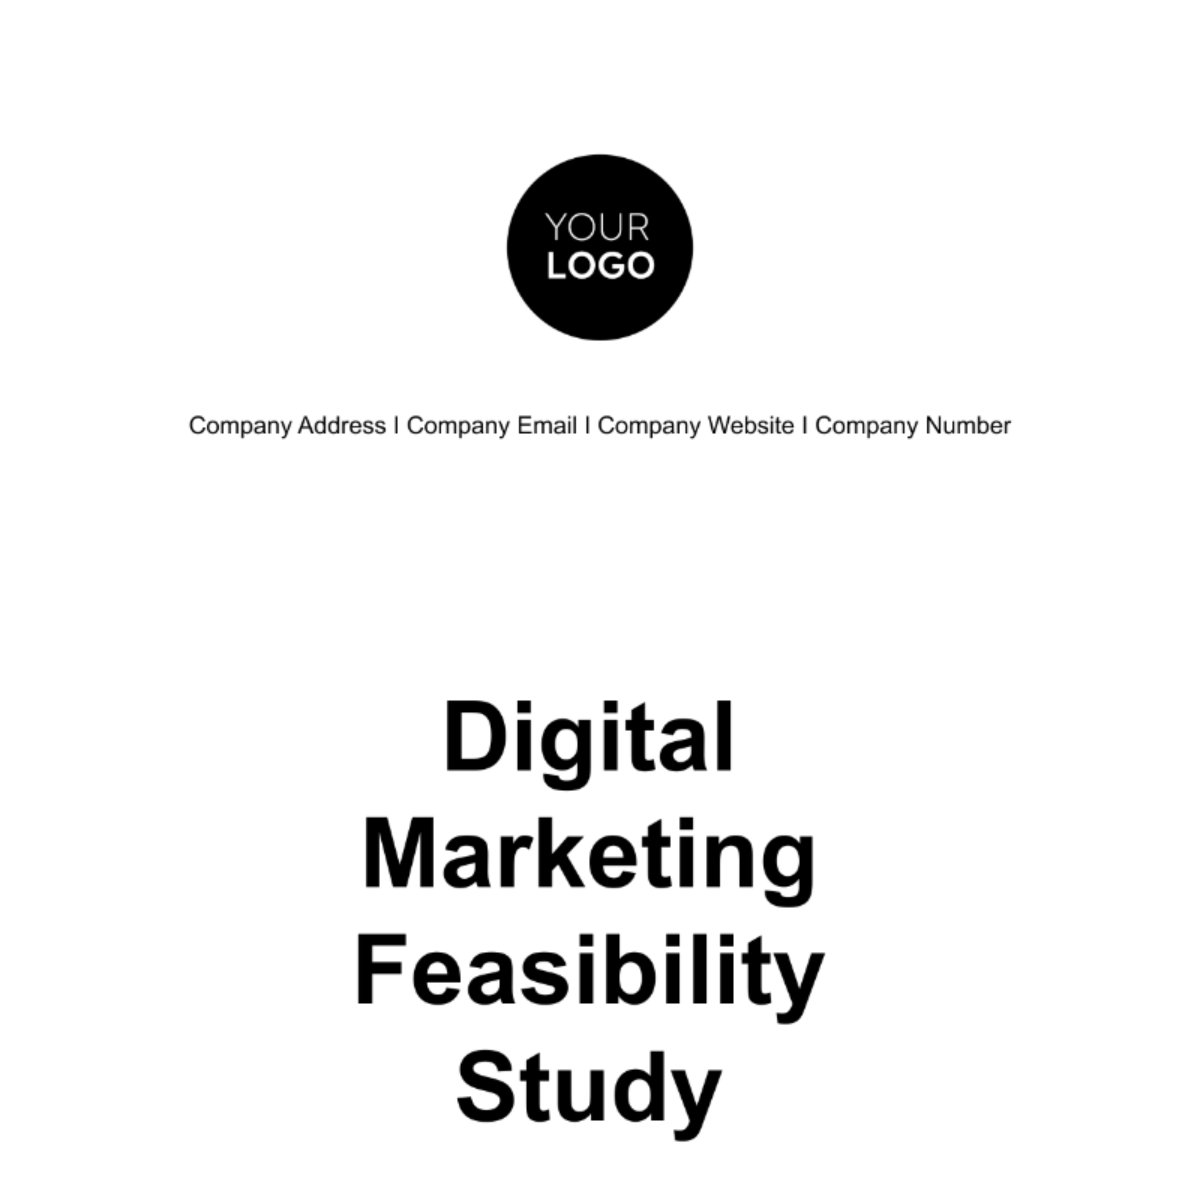 Digital Marketing Feasibility Study Template